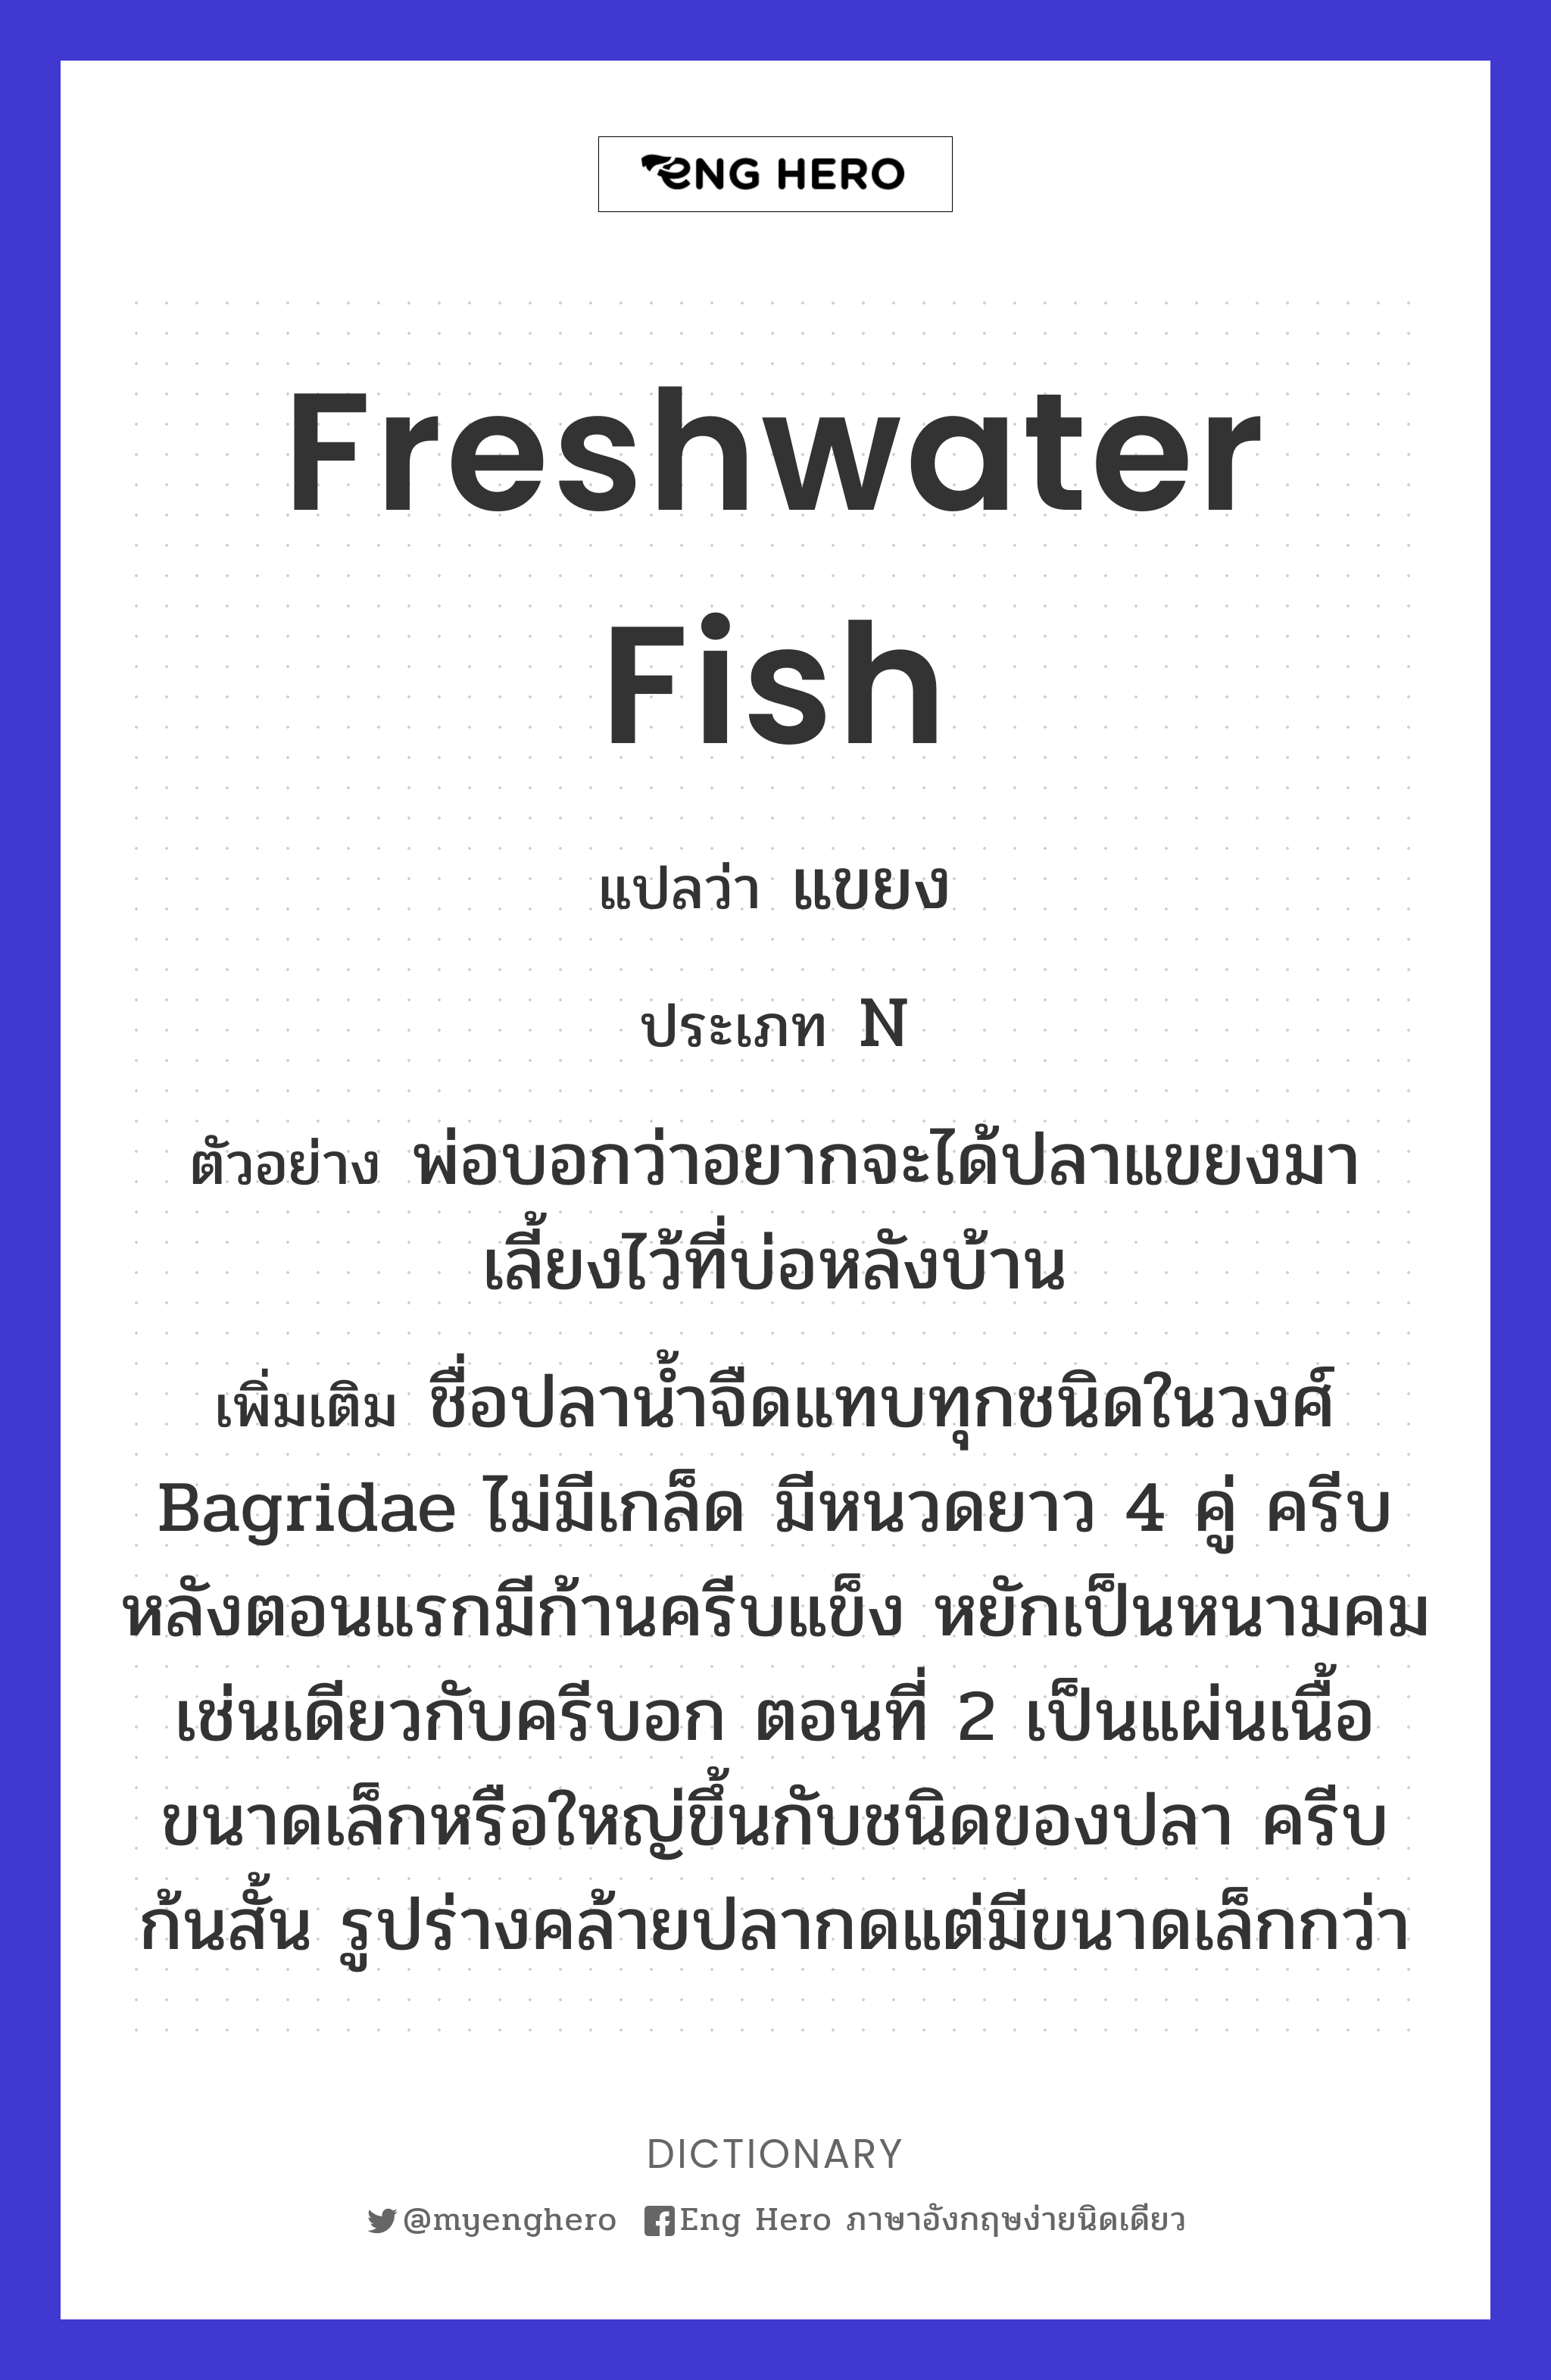 freshwater fish